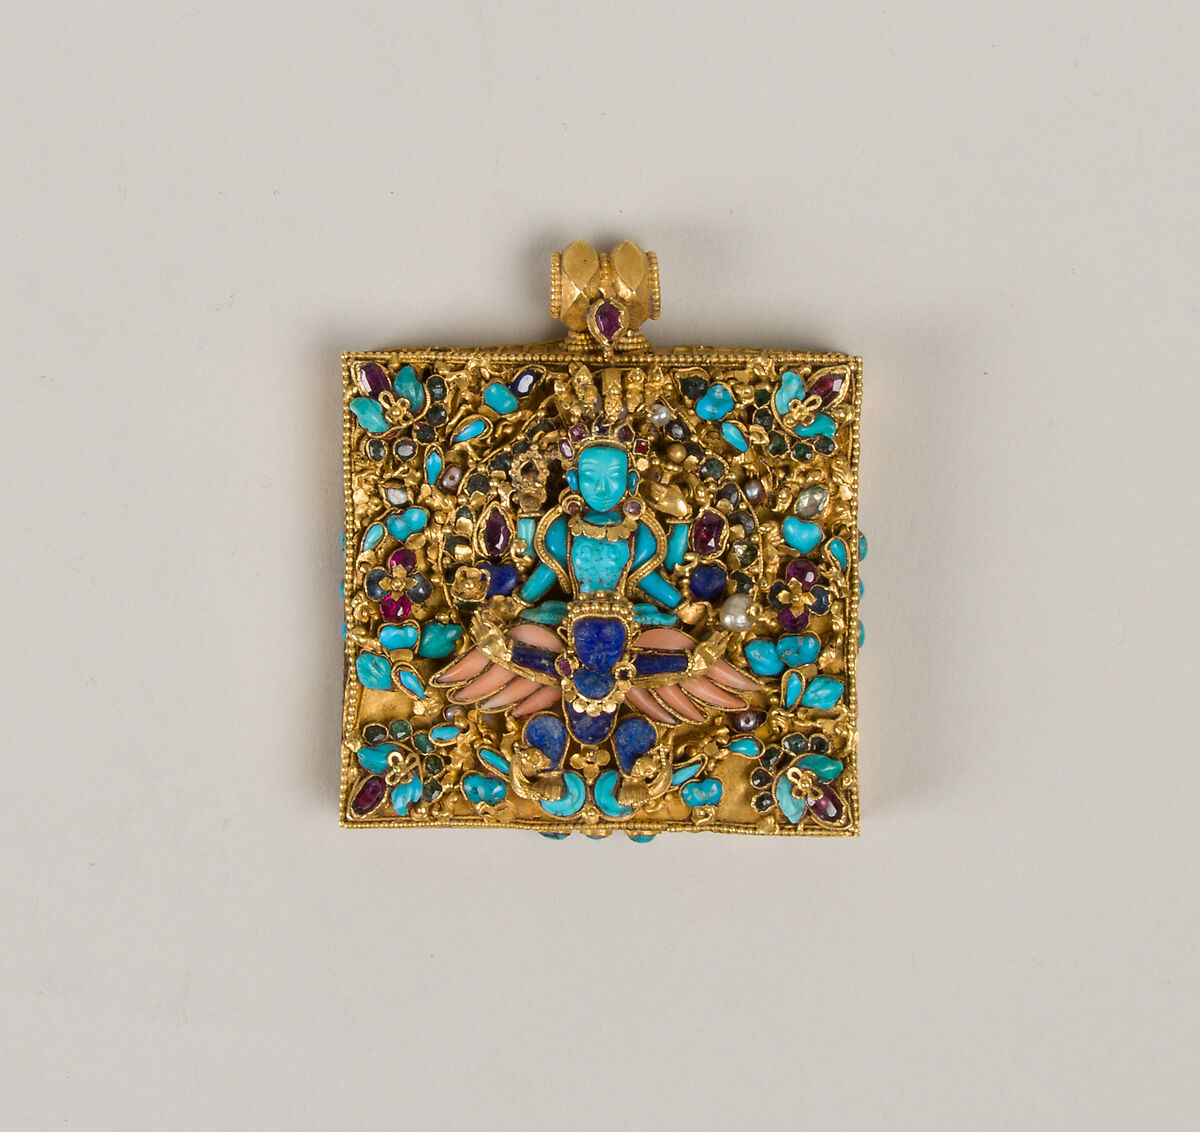 Amulet case with Vishnu Riding Garuda, Gold, rubies, sapphires, emeralds, pearls, zircon, coral, lapis lazuli, and turquoise, Nepal 